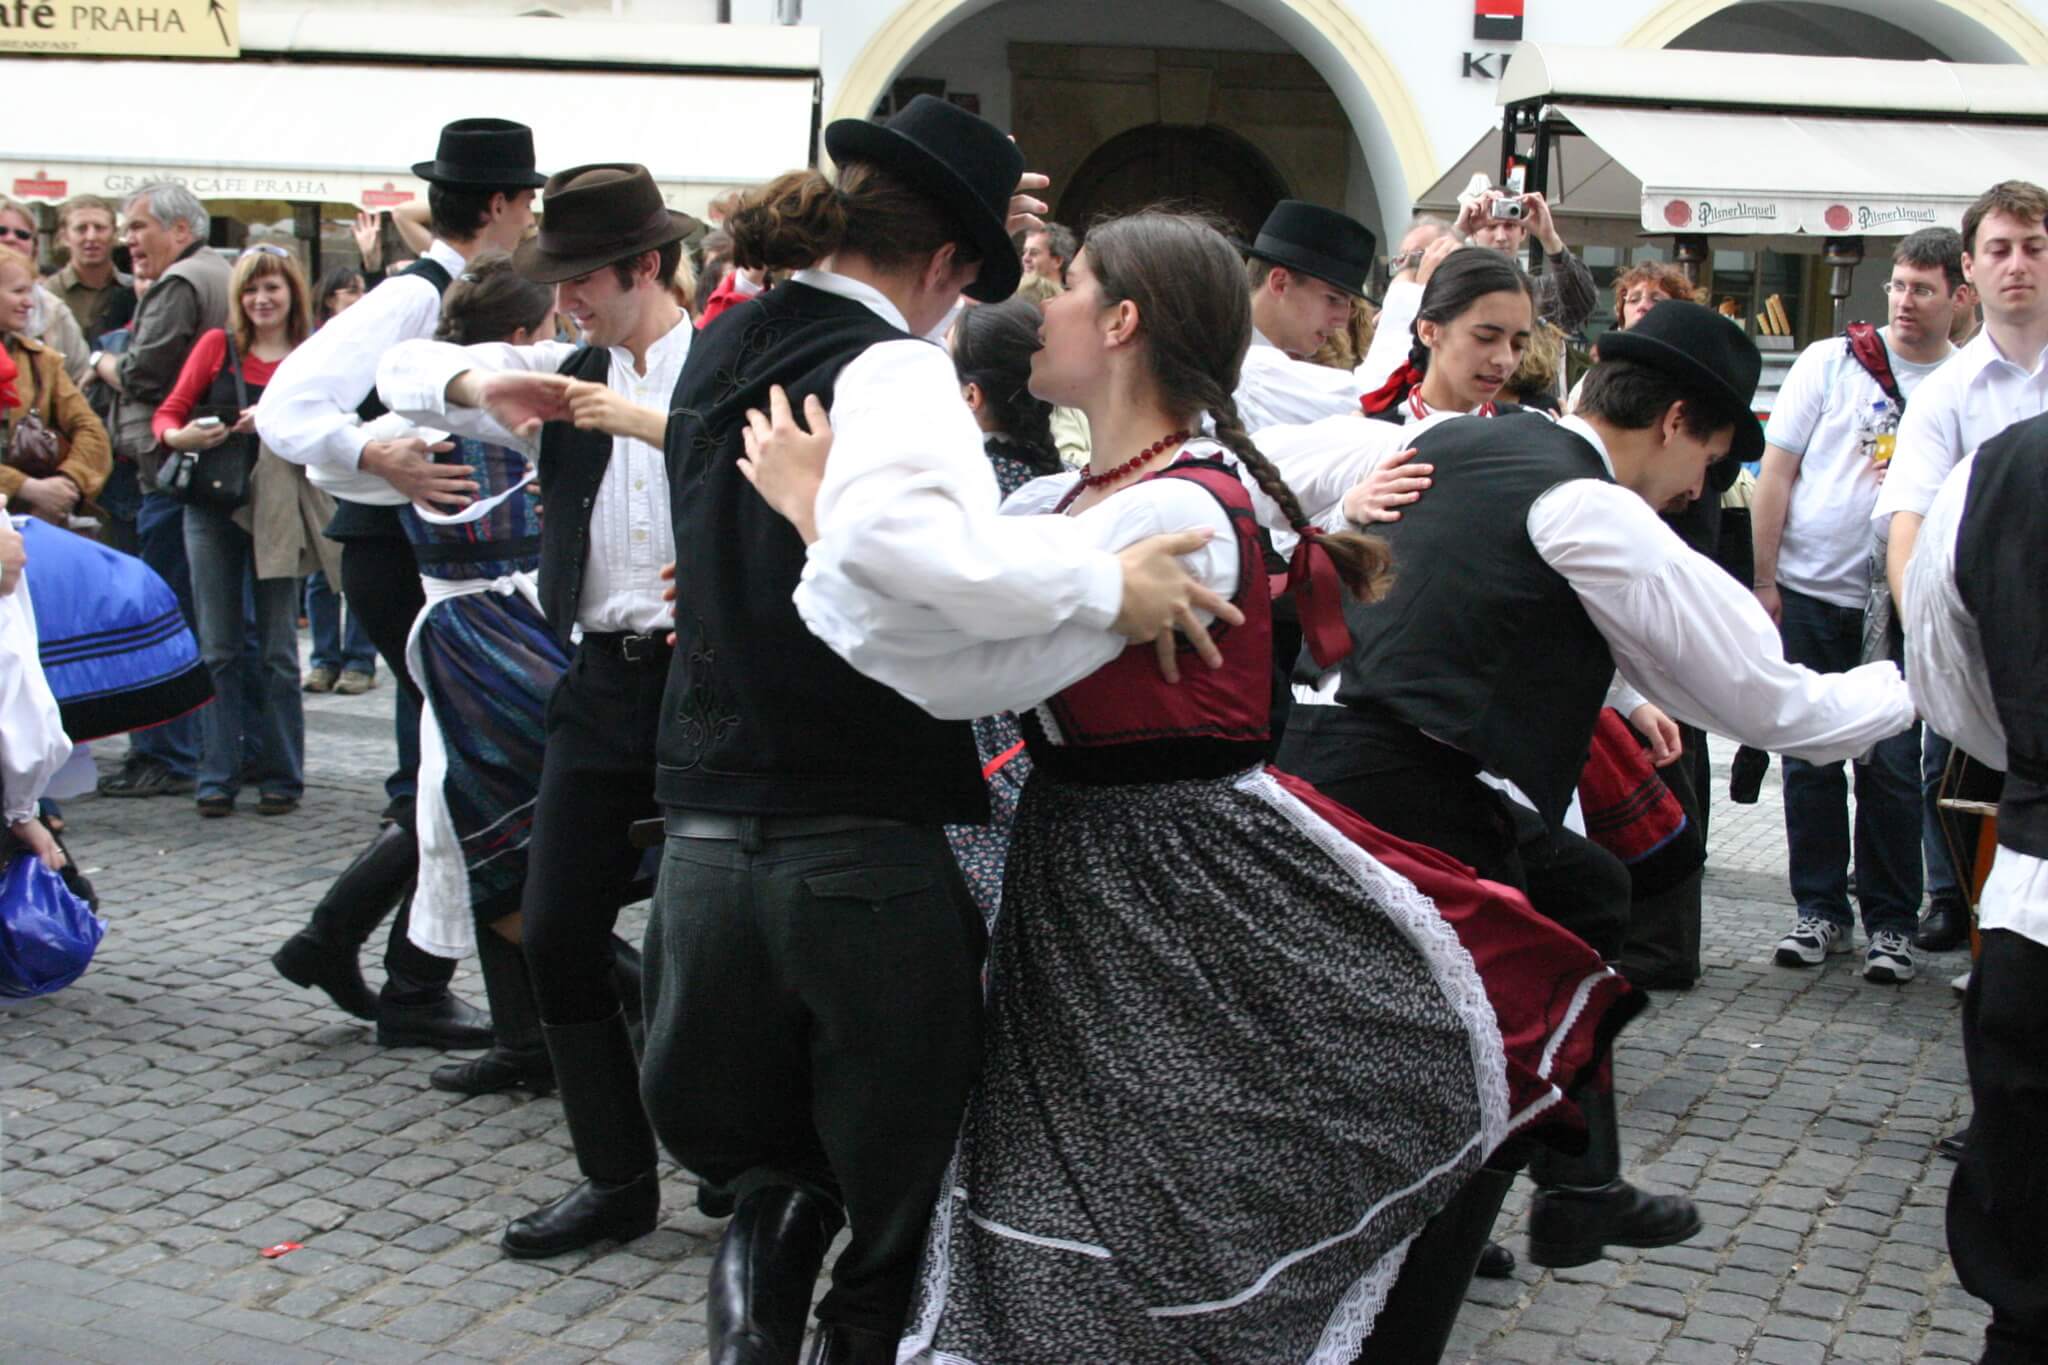 Folk_dancing,_Prague